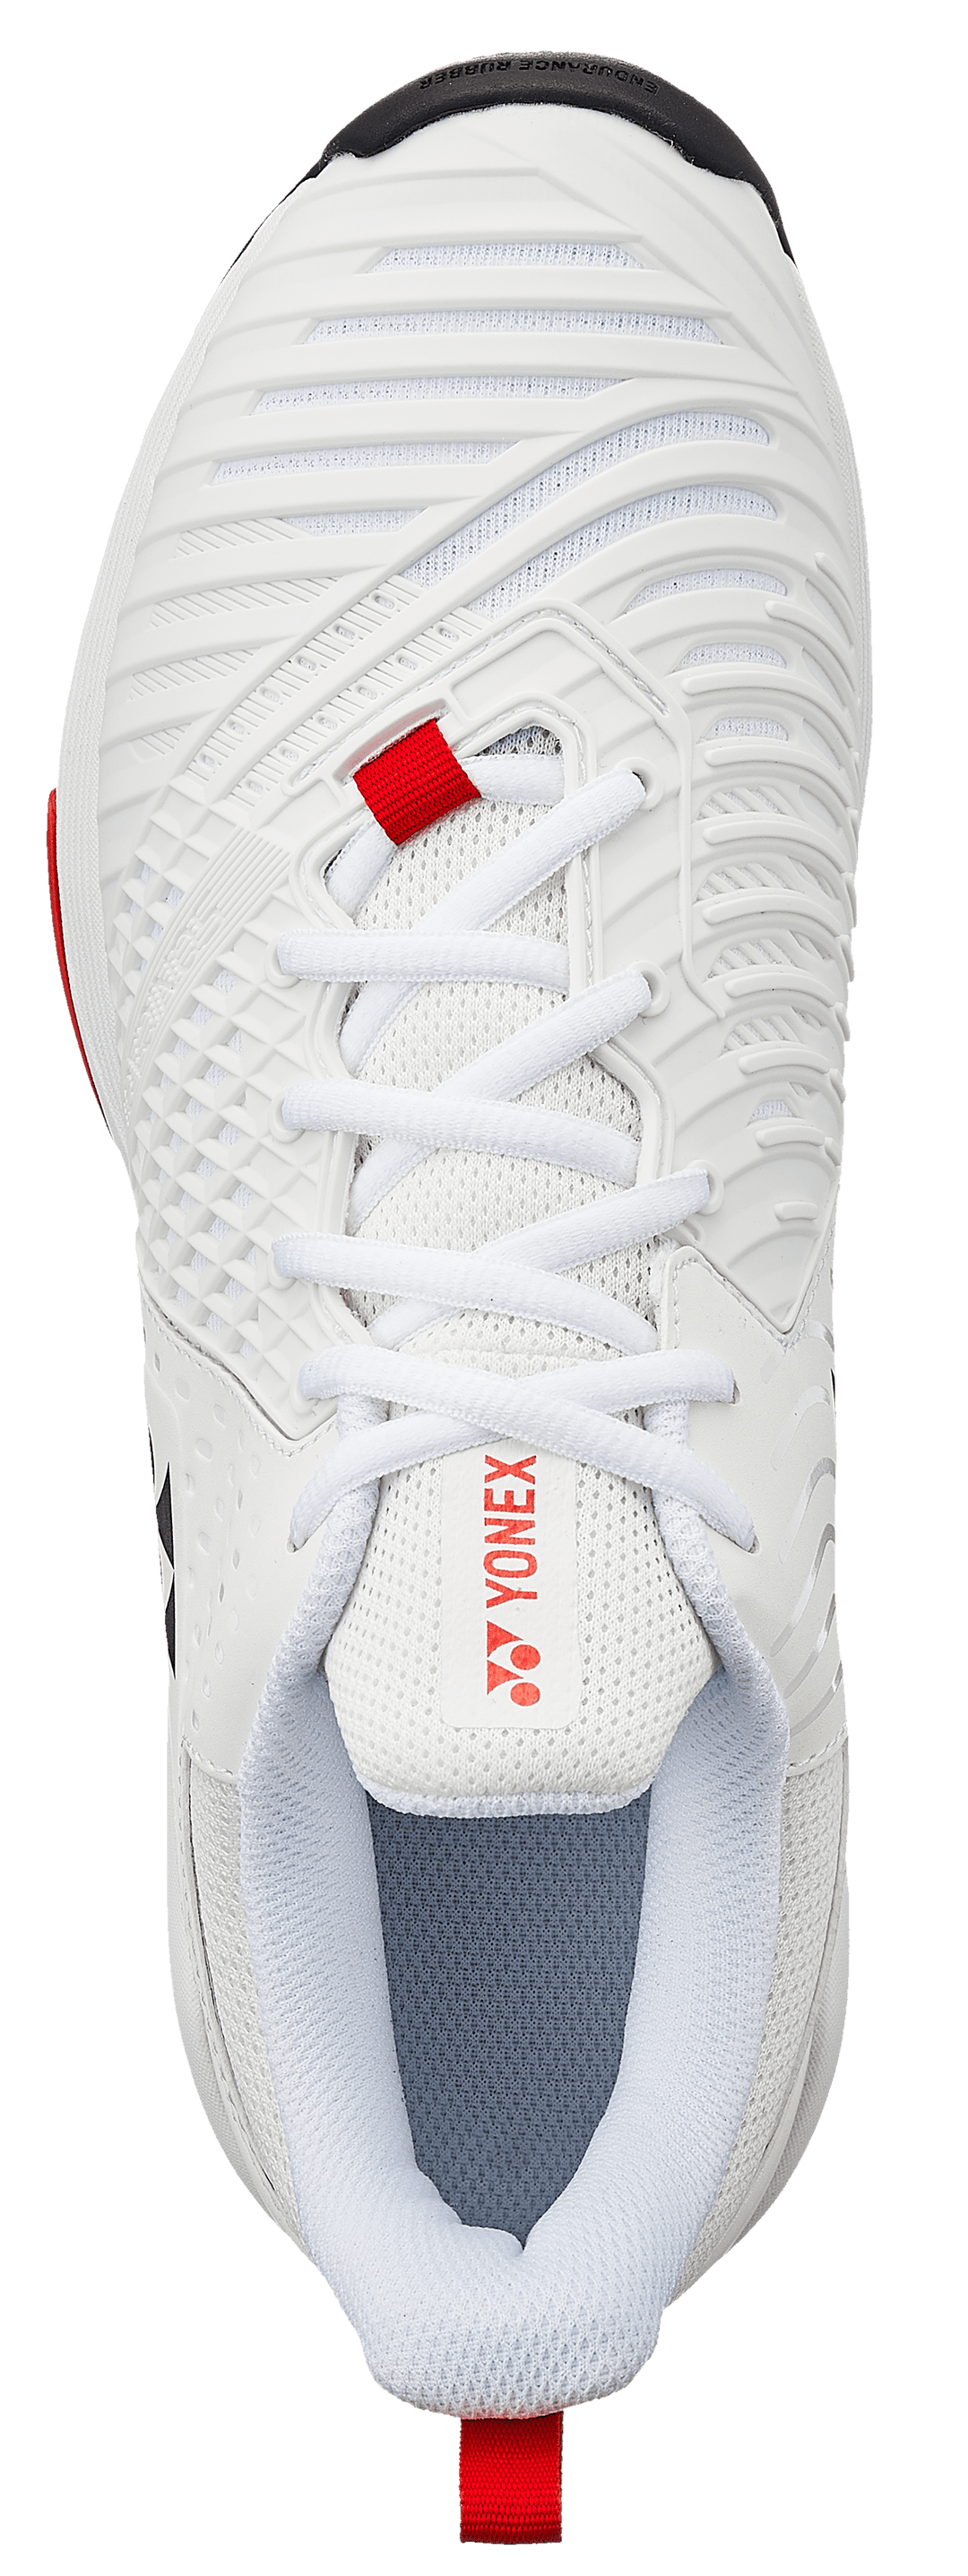 Yonex Power Cushion Sonicage 3 Men's Tennis All Court Shoe White-Red Men's Tennis Shoes Yonex 